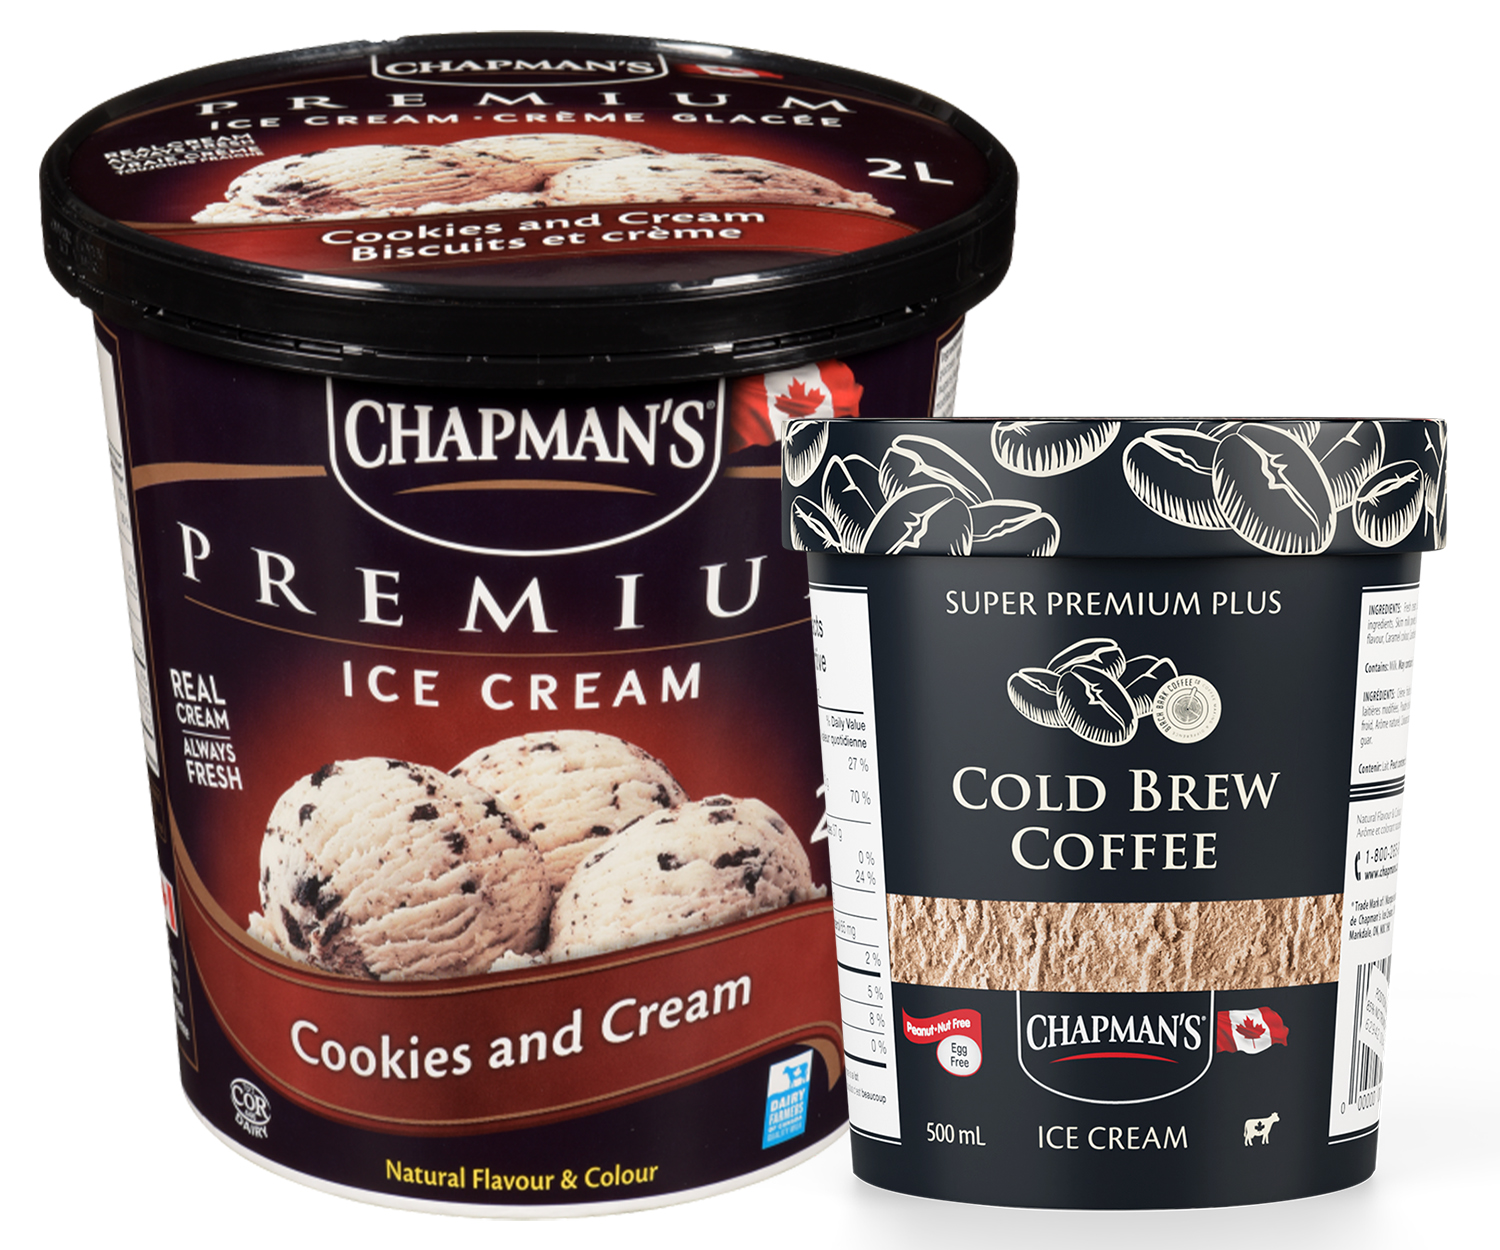 chapmans premium 2L ice cream and super premium plus ice cream from wholesale distributor transcold distribution